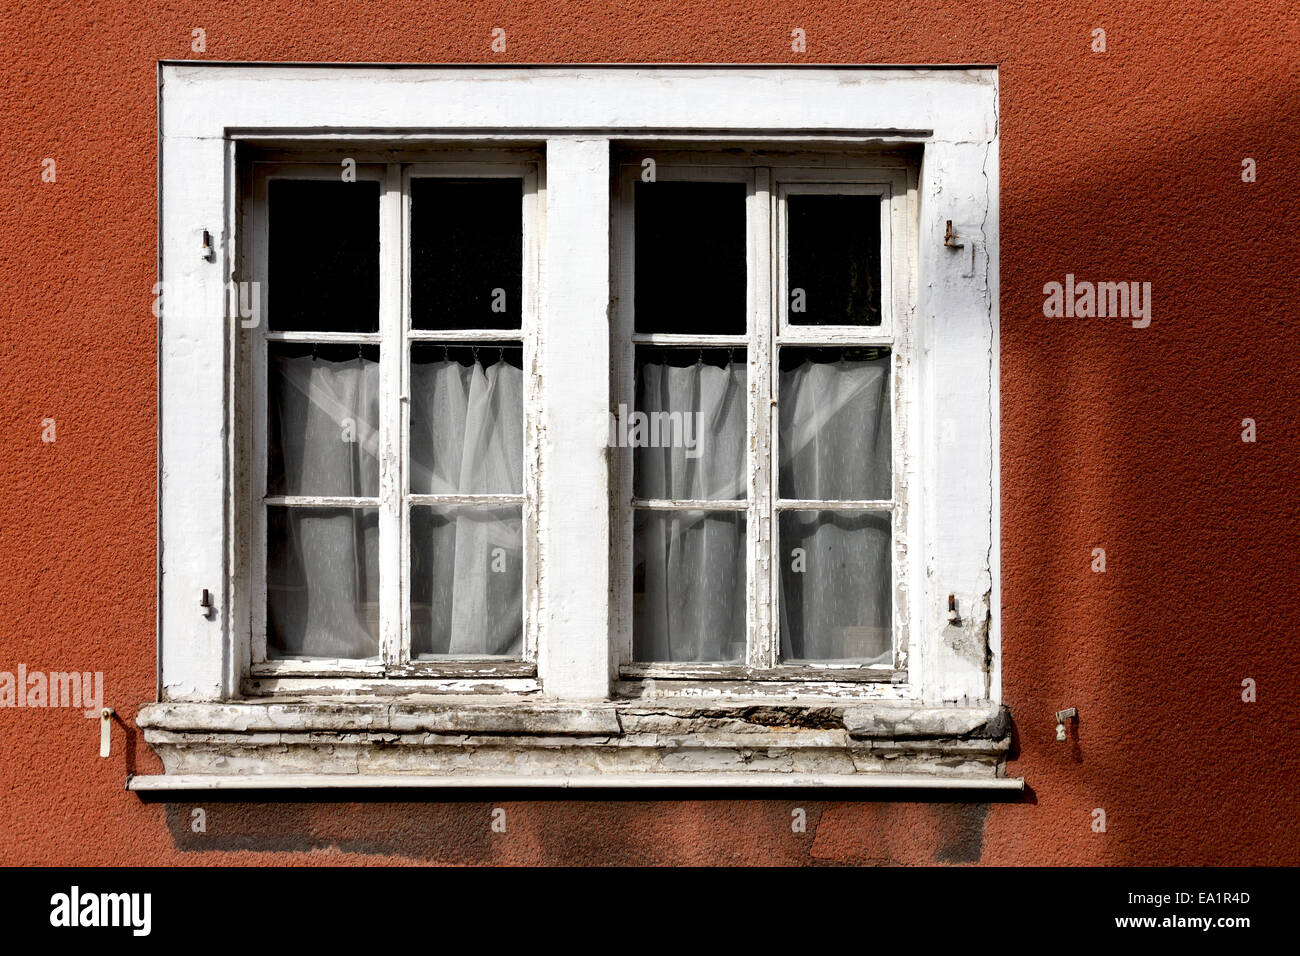 Sash windows Stock Photo